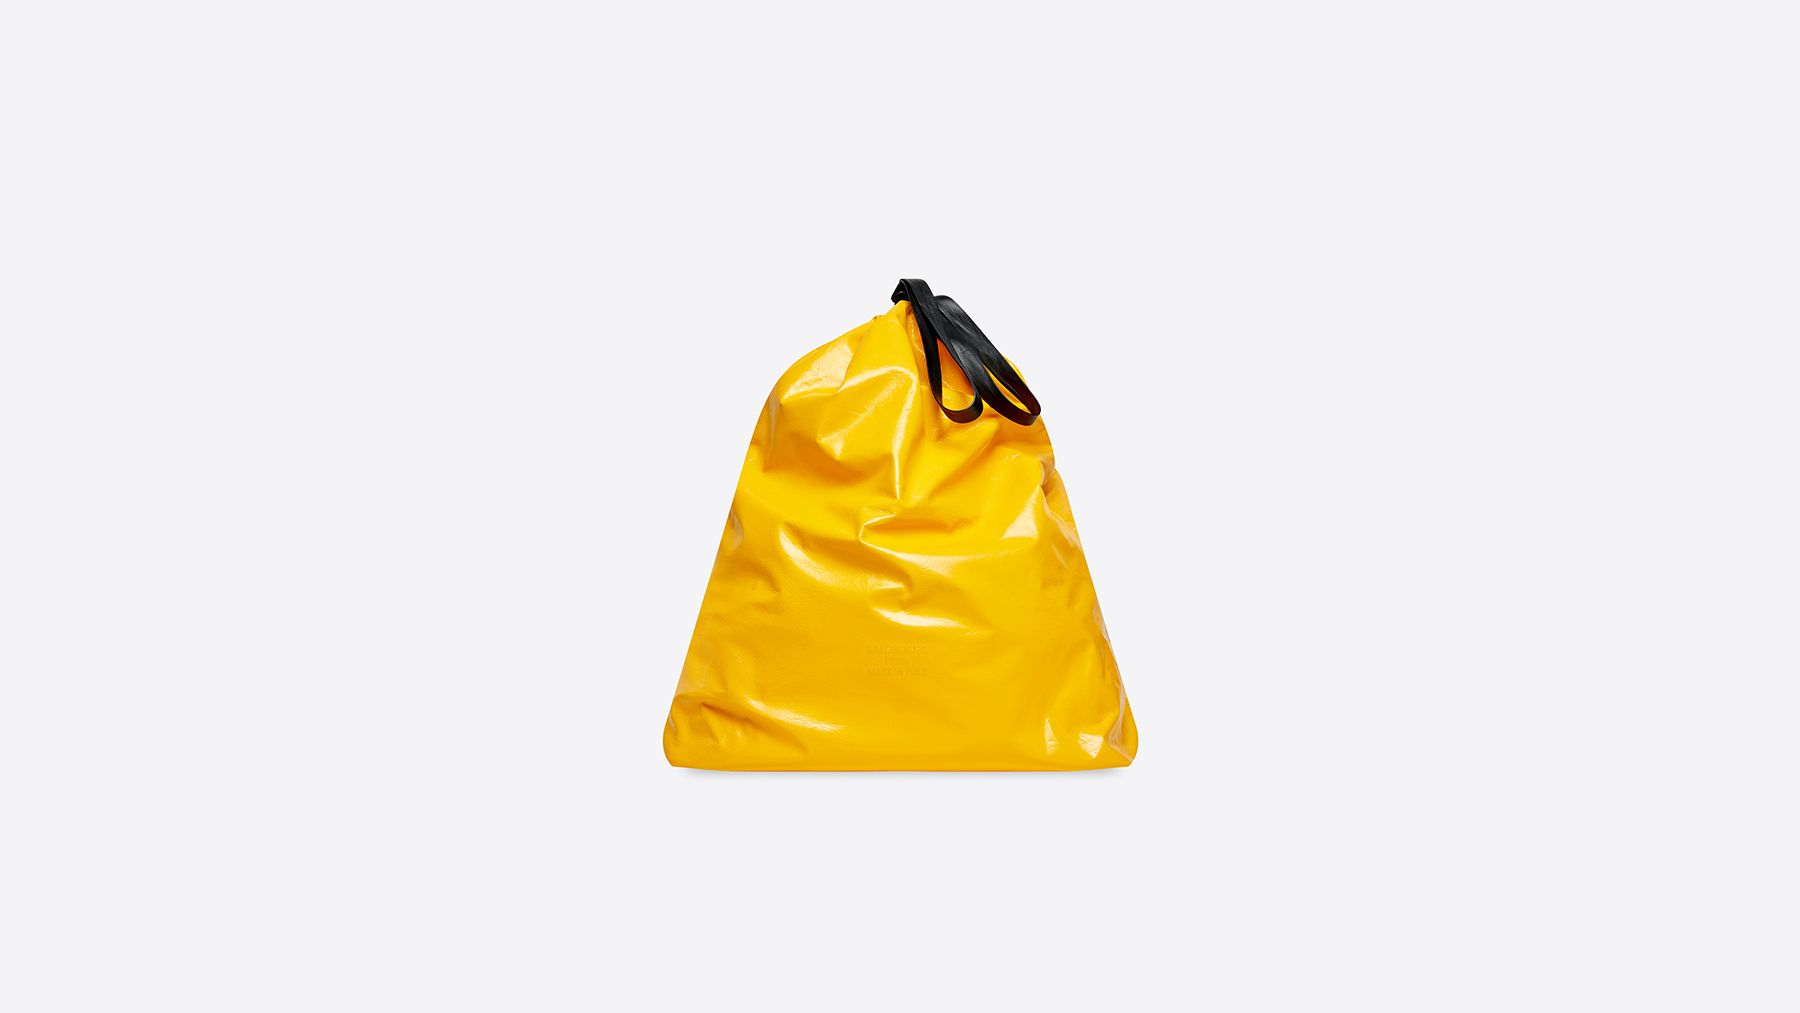 One man's trash is another's designer bag? Balenciaga intros